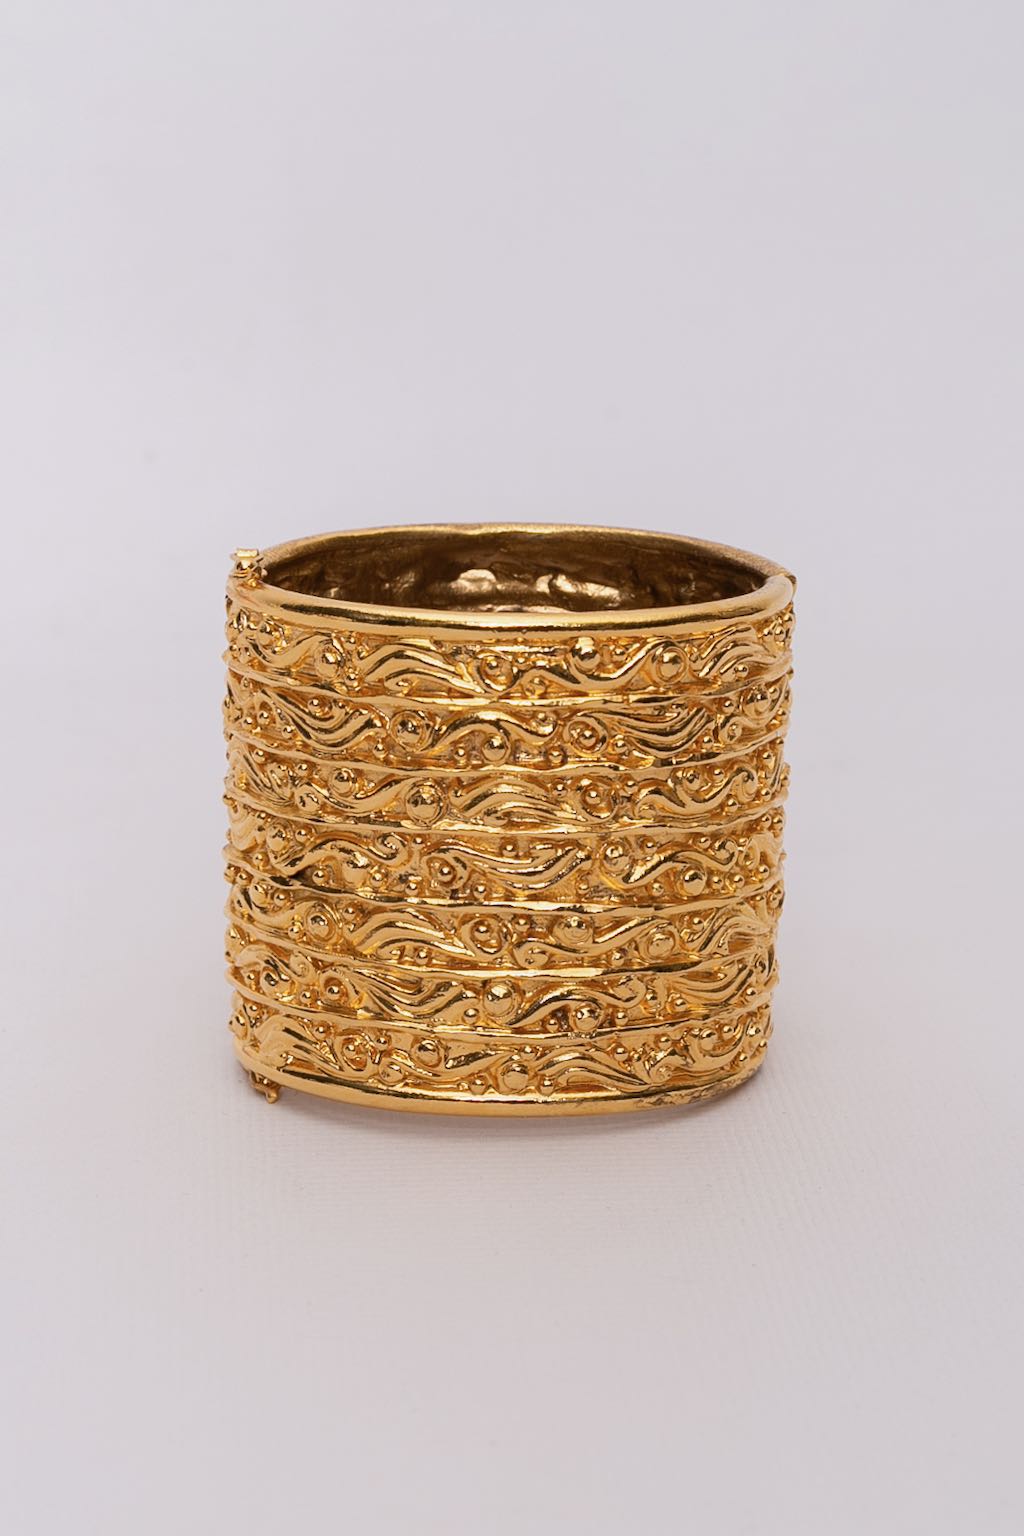 Chanel baroque cuff bracelet